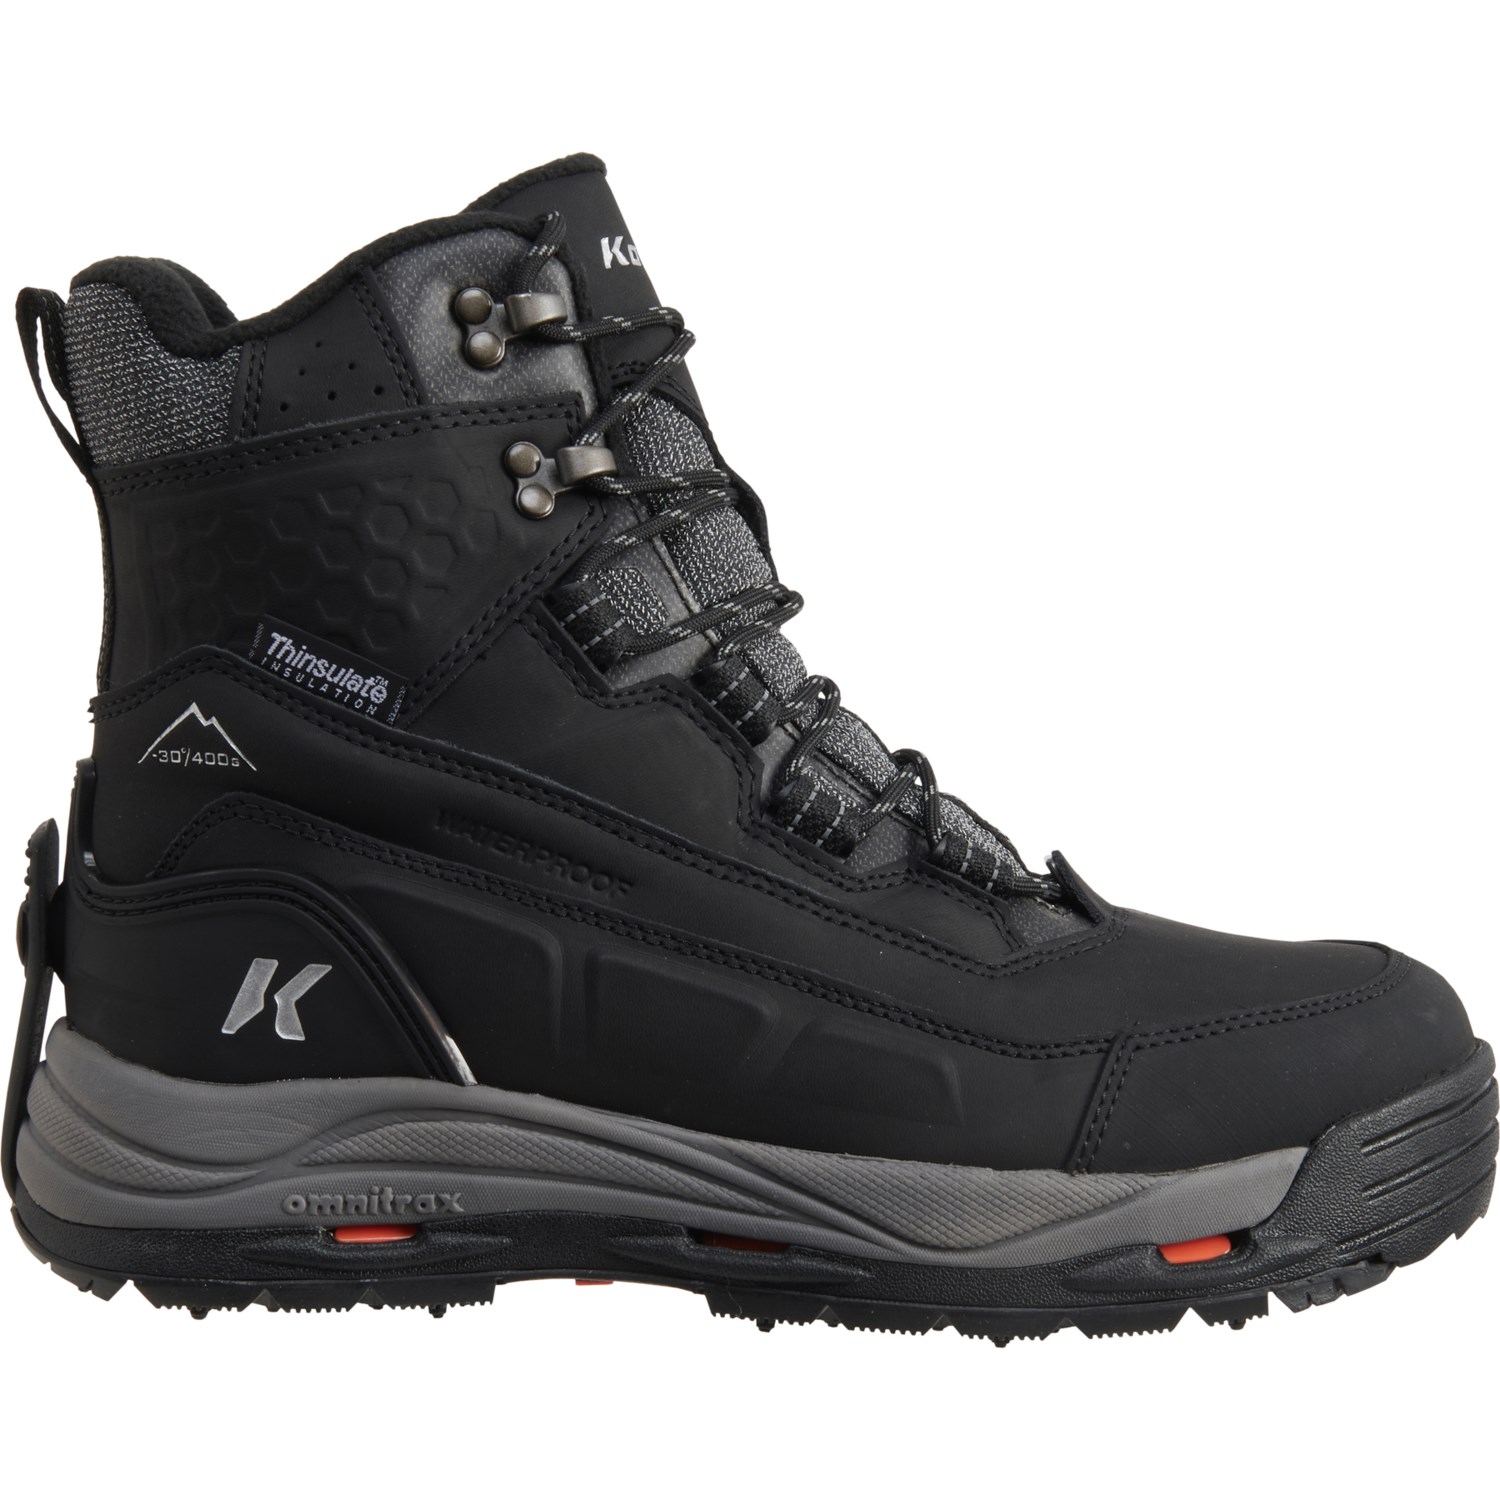 Korkers Snowmageddon Snow Boots (For Men) - Save 60%